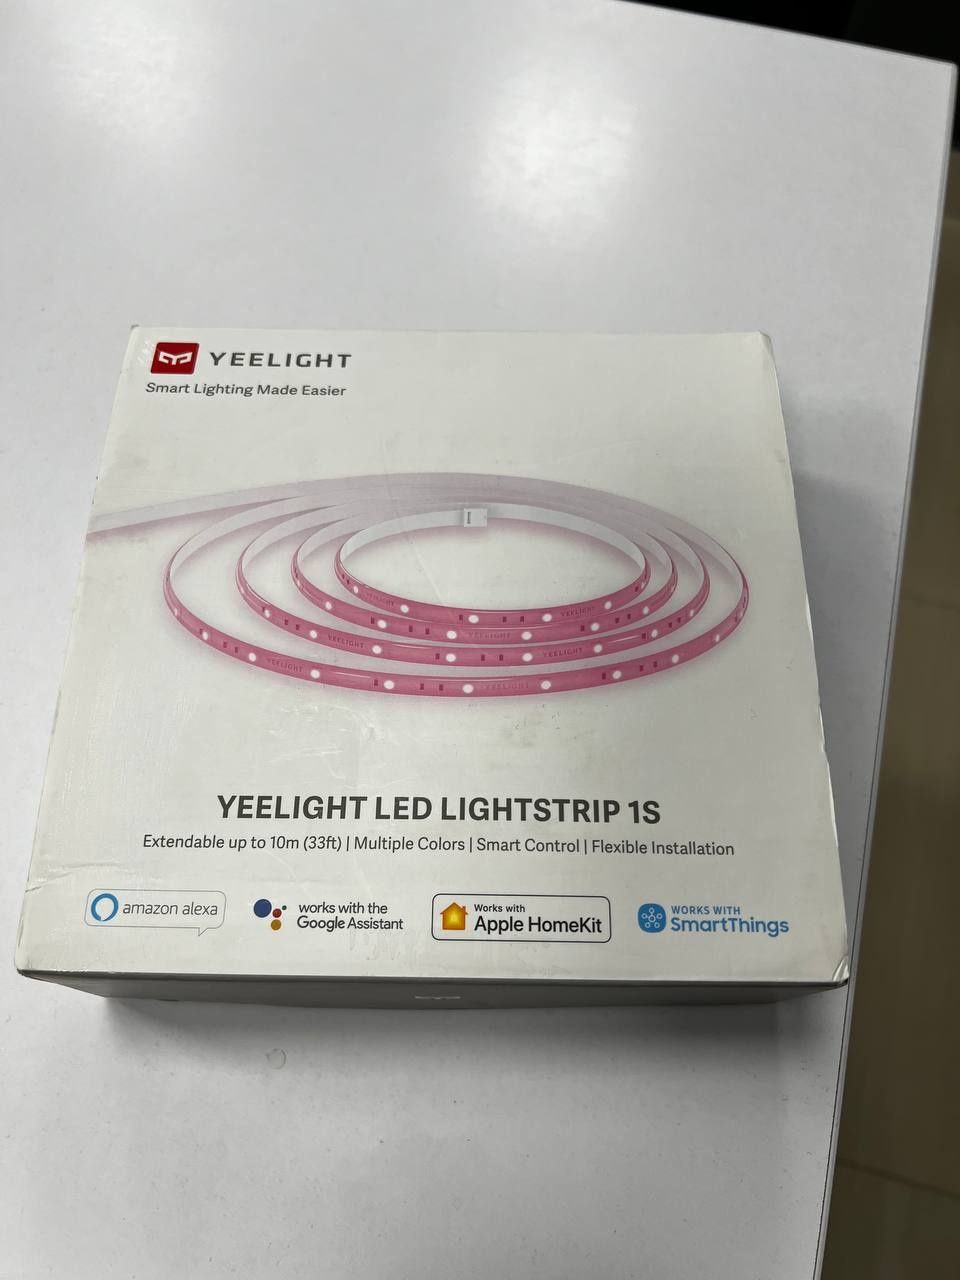 LED стрічка Yeelight Lights trip Plus 1s